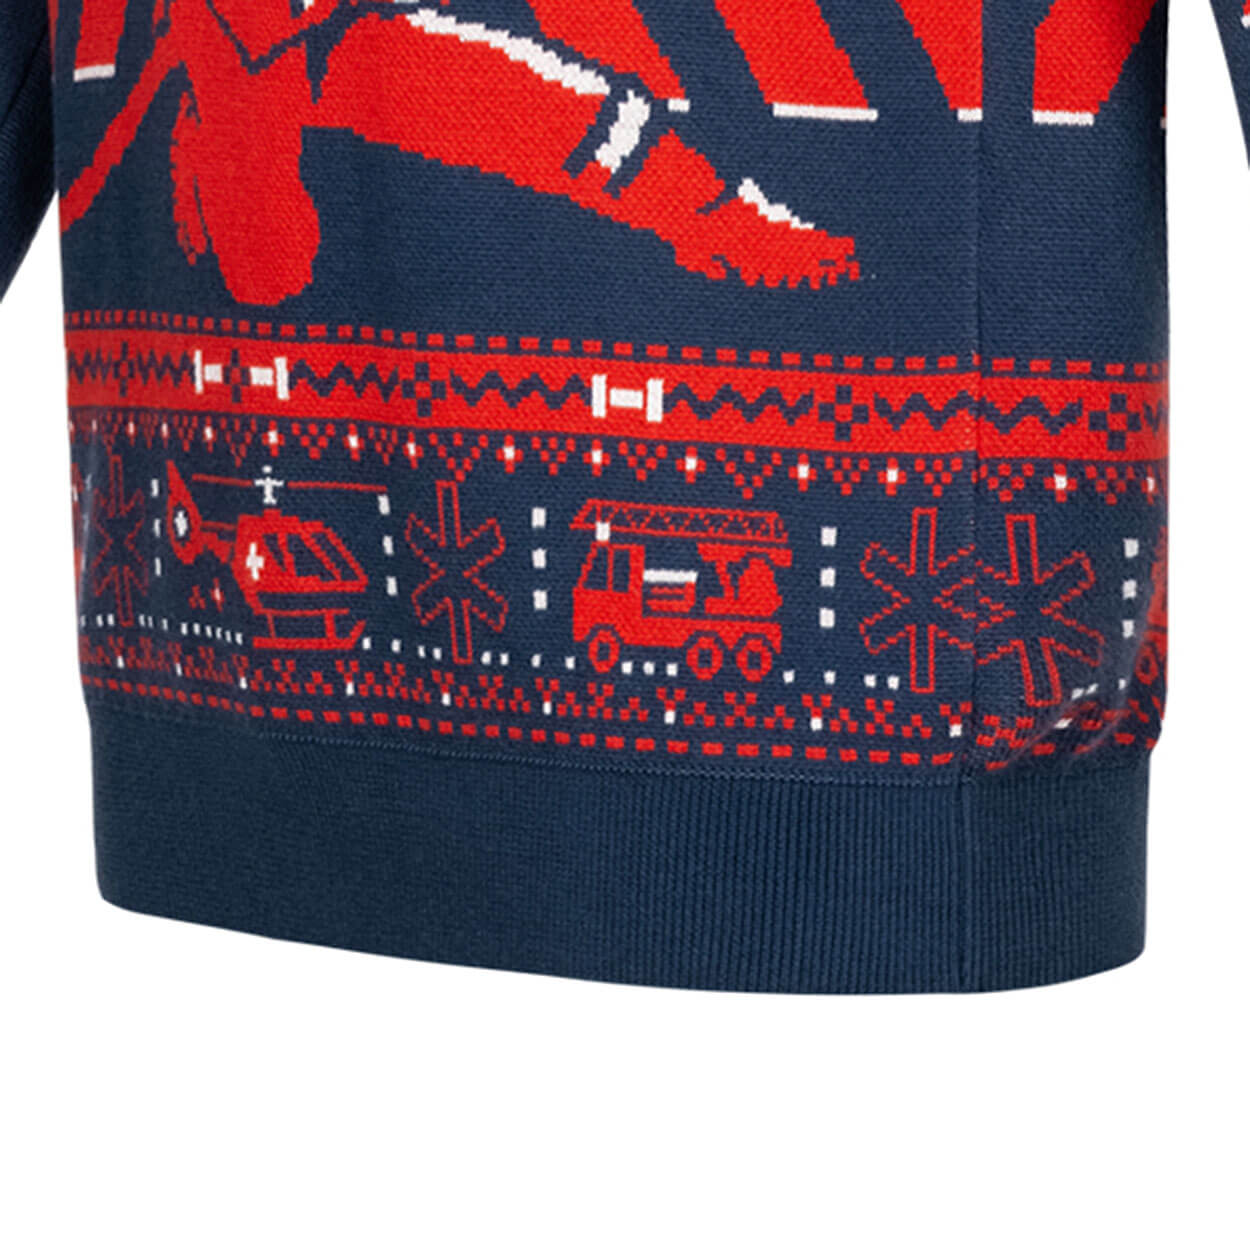 Löschmann - Ugly Sweater Limited Christmas Edition